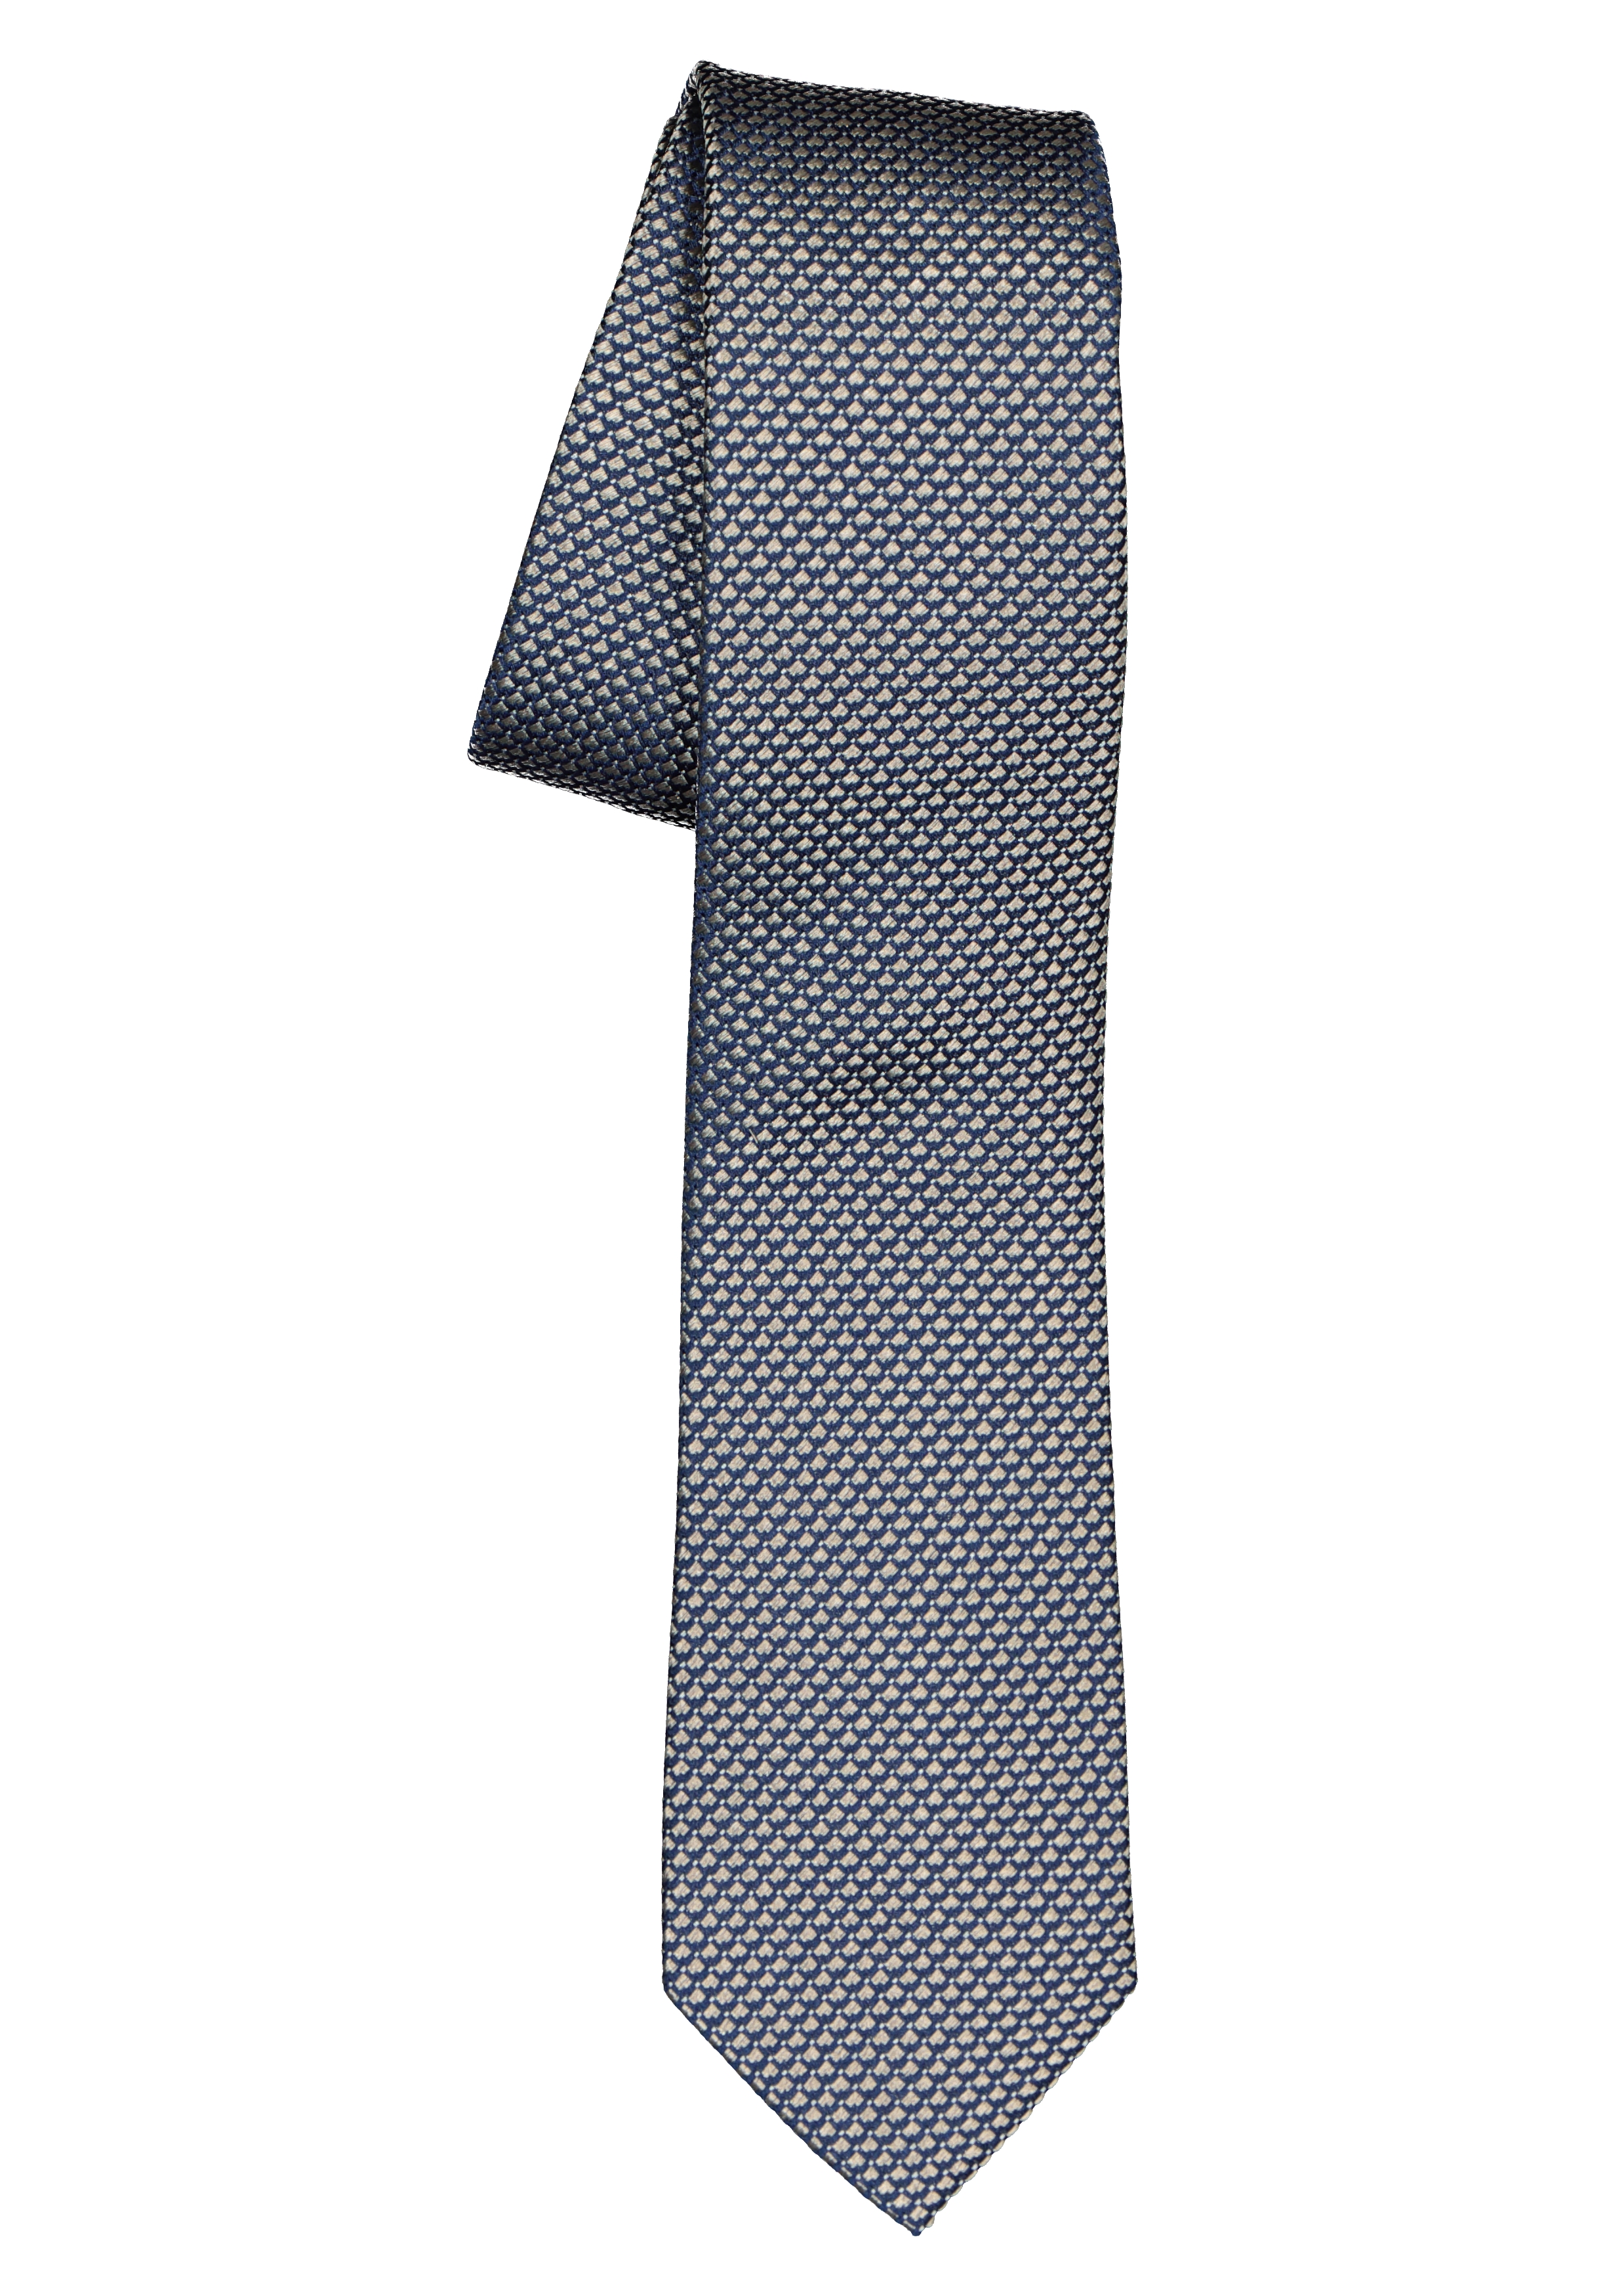 ETERNA smalle stropdas, donkerblauw met beige structuur